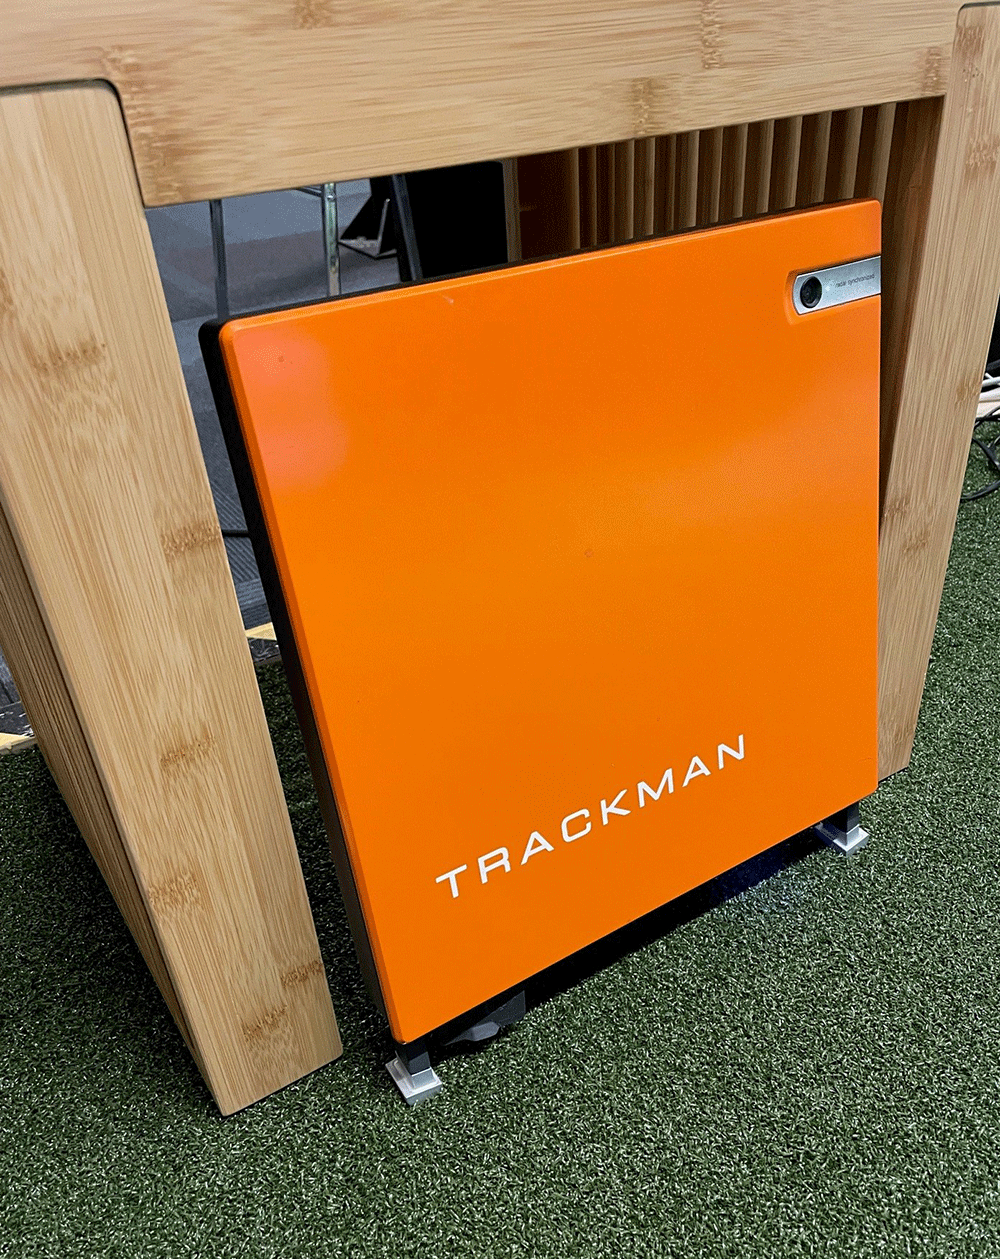 Trackman golfsimulator